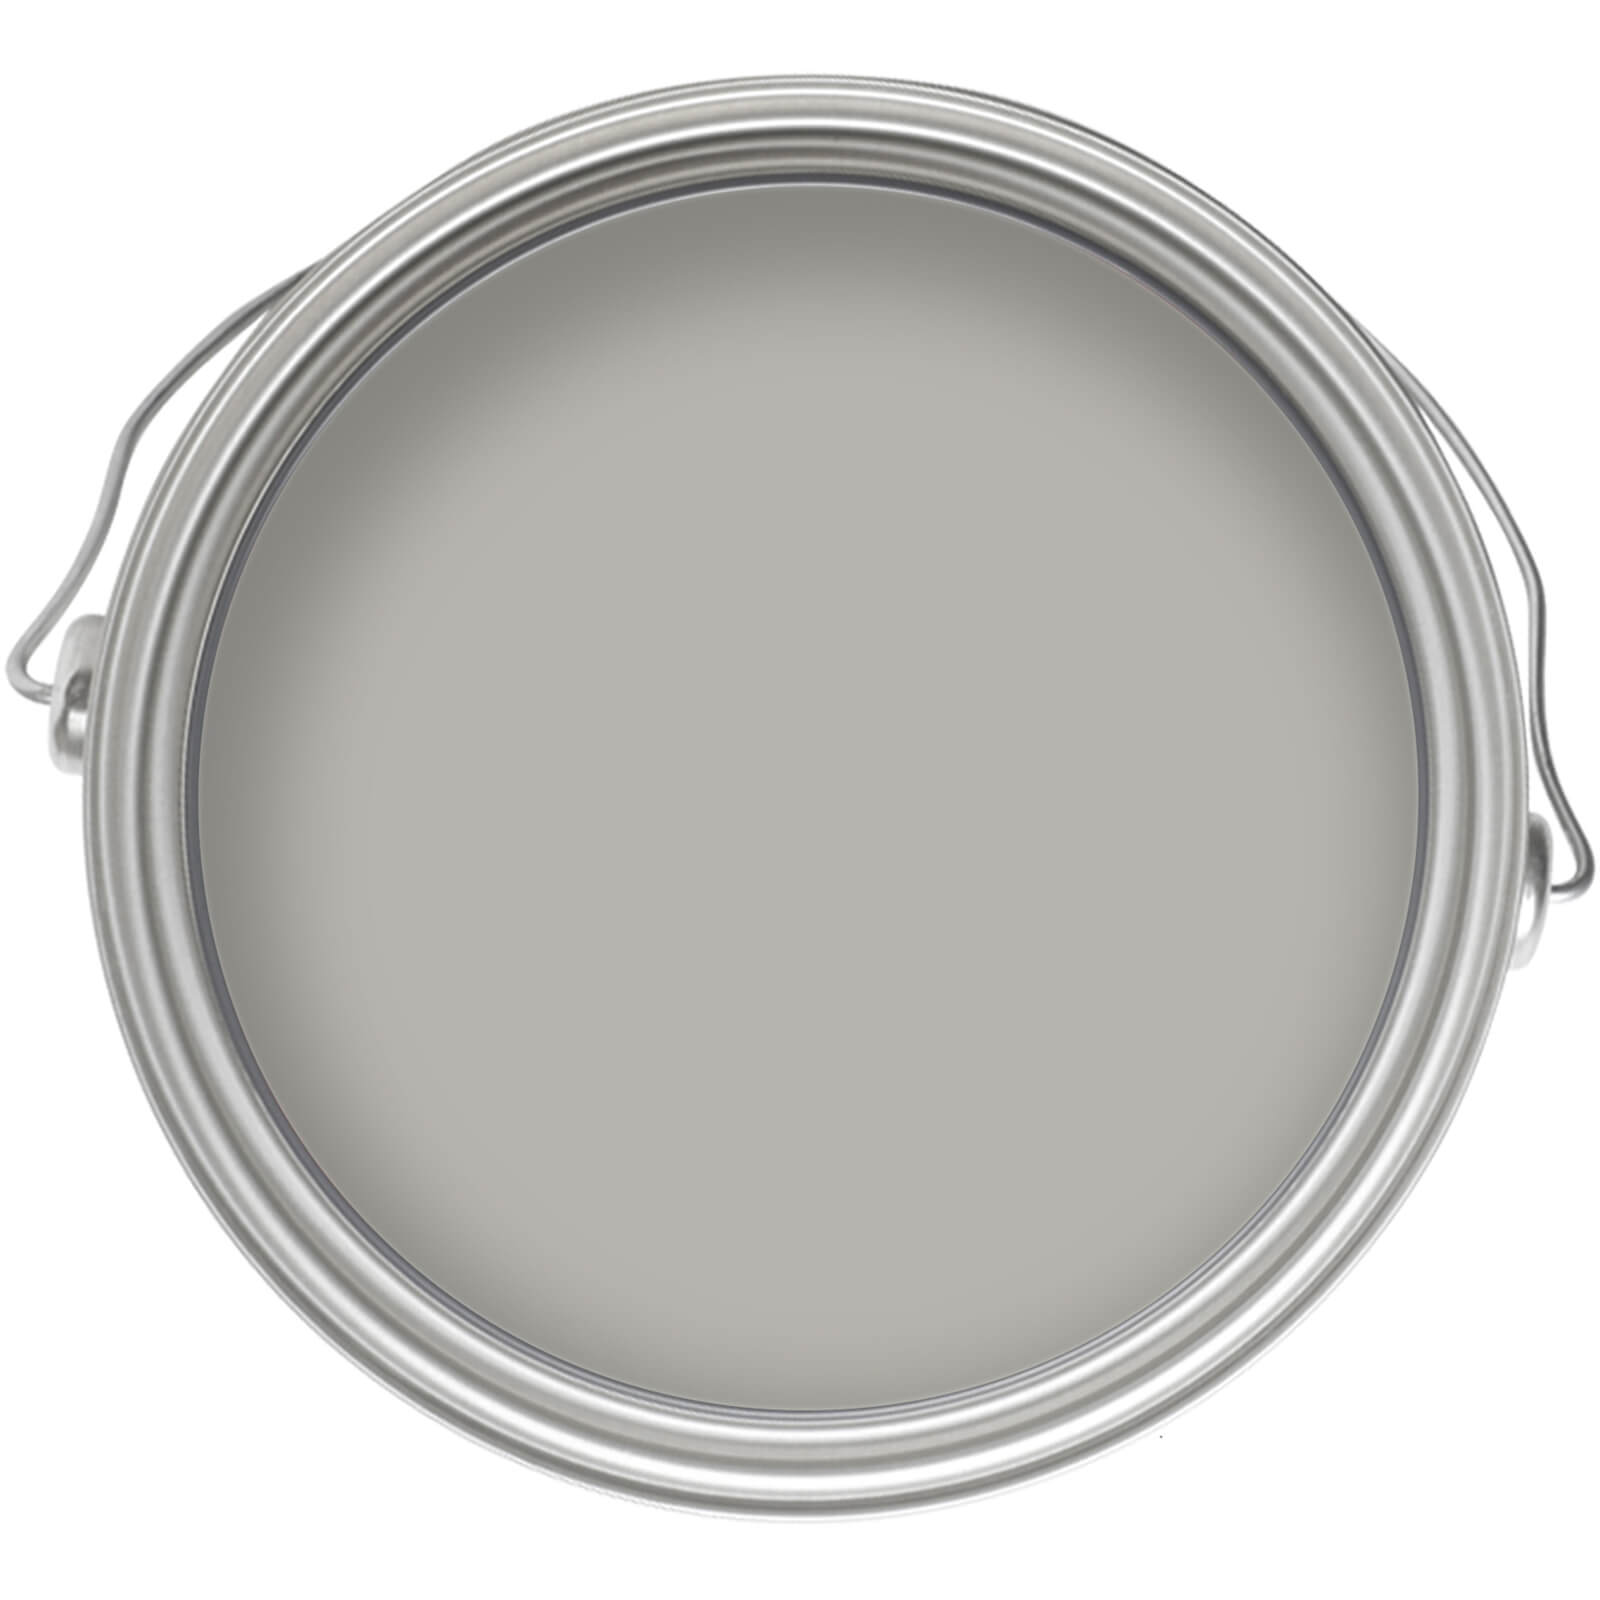 Homebase Smooth Masonry Colour Paint Tester - Graphite Grey 250ml